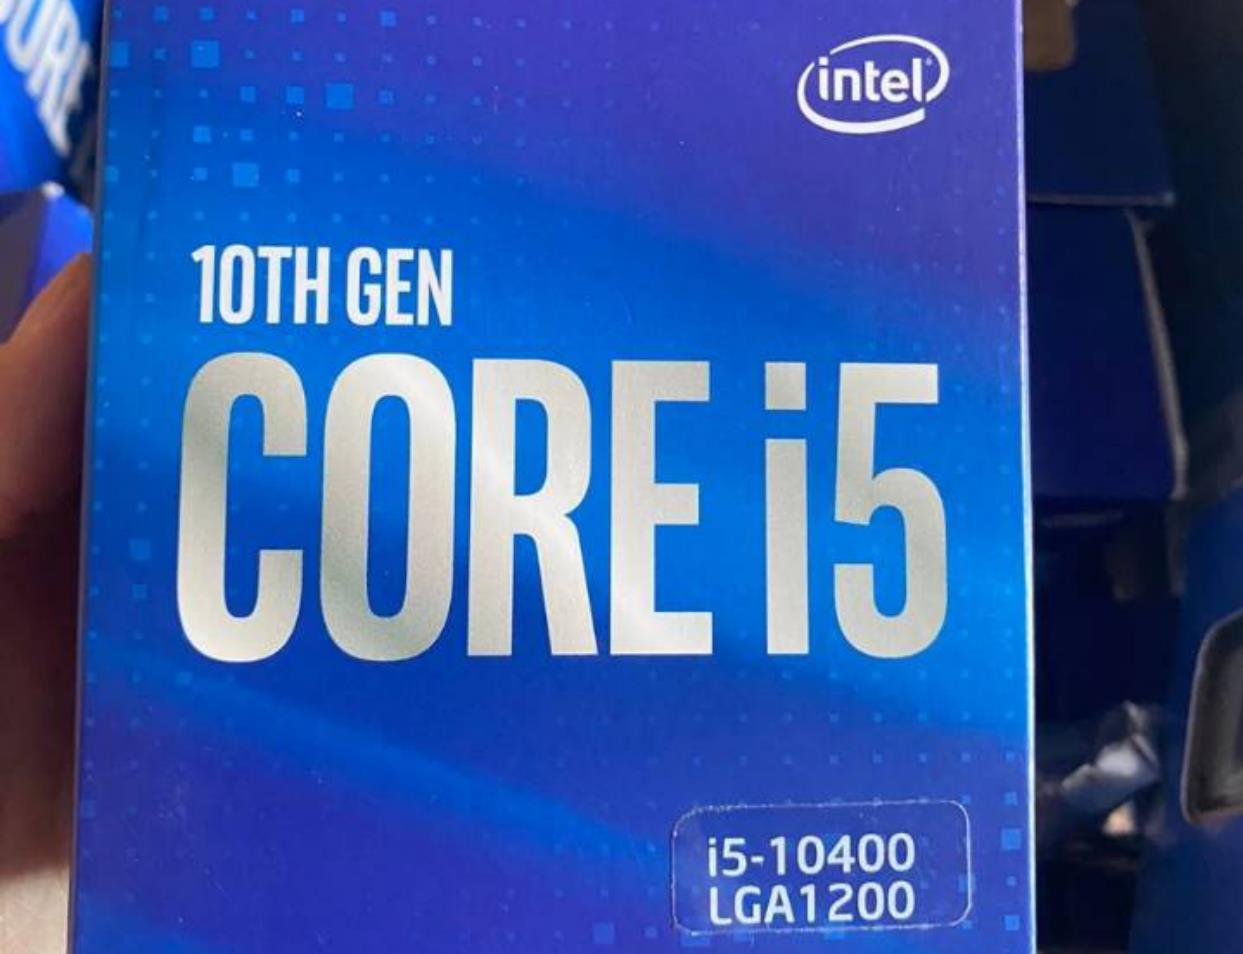 Intel Core I5 10400 CPU LGA 1200 Comet Lake 6 Cores 12 Threads 2.9GHz Processor